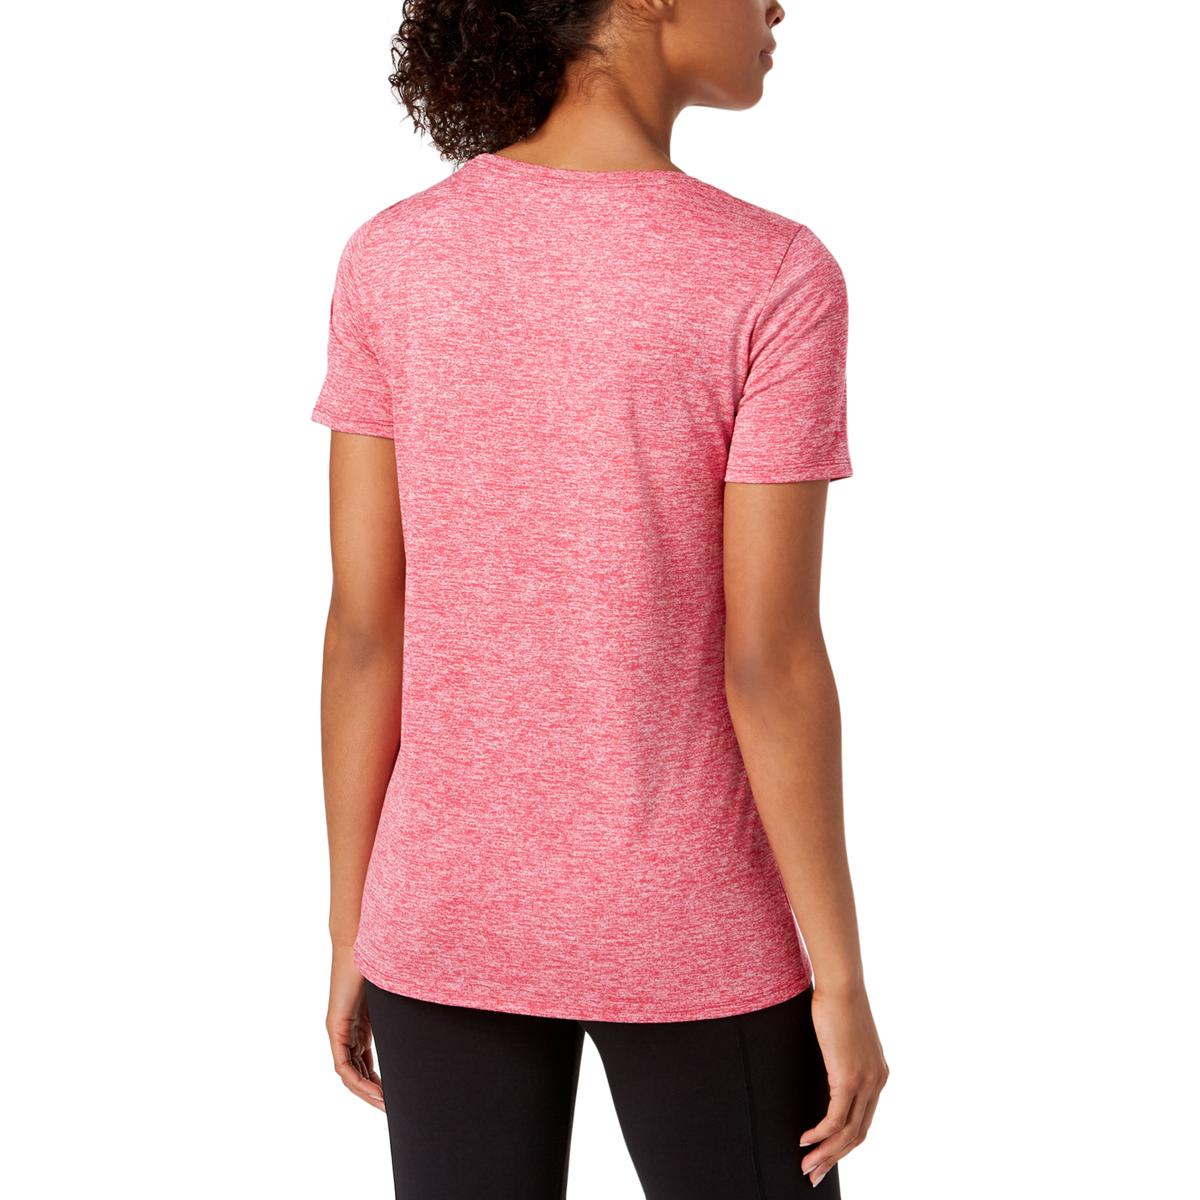 Nike Womens Pink Dri-Fit Yoga Training T-Shirt Athletic L BHFO 7404 | eBay